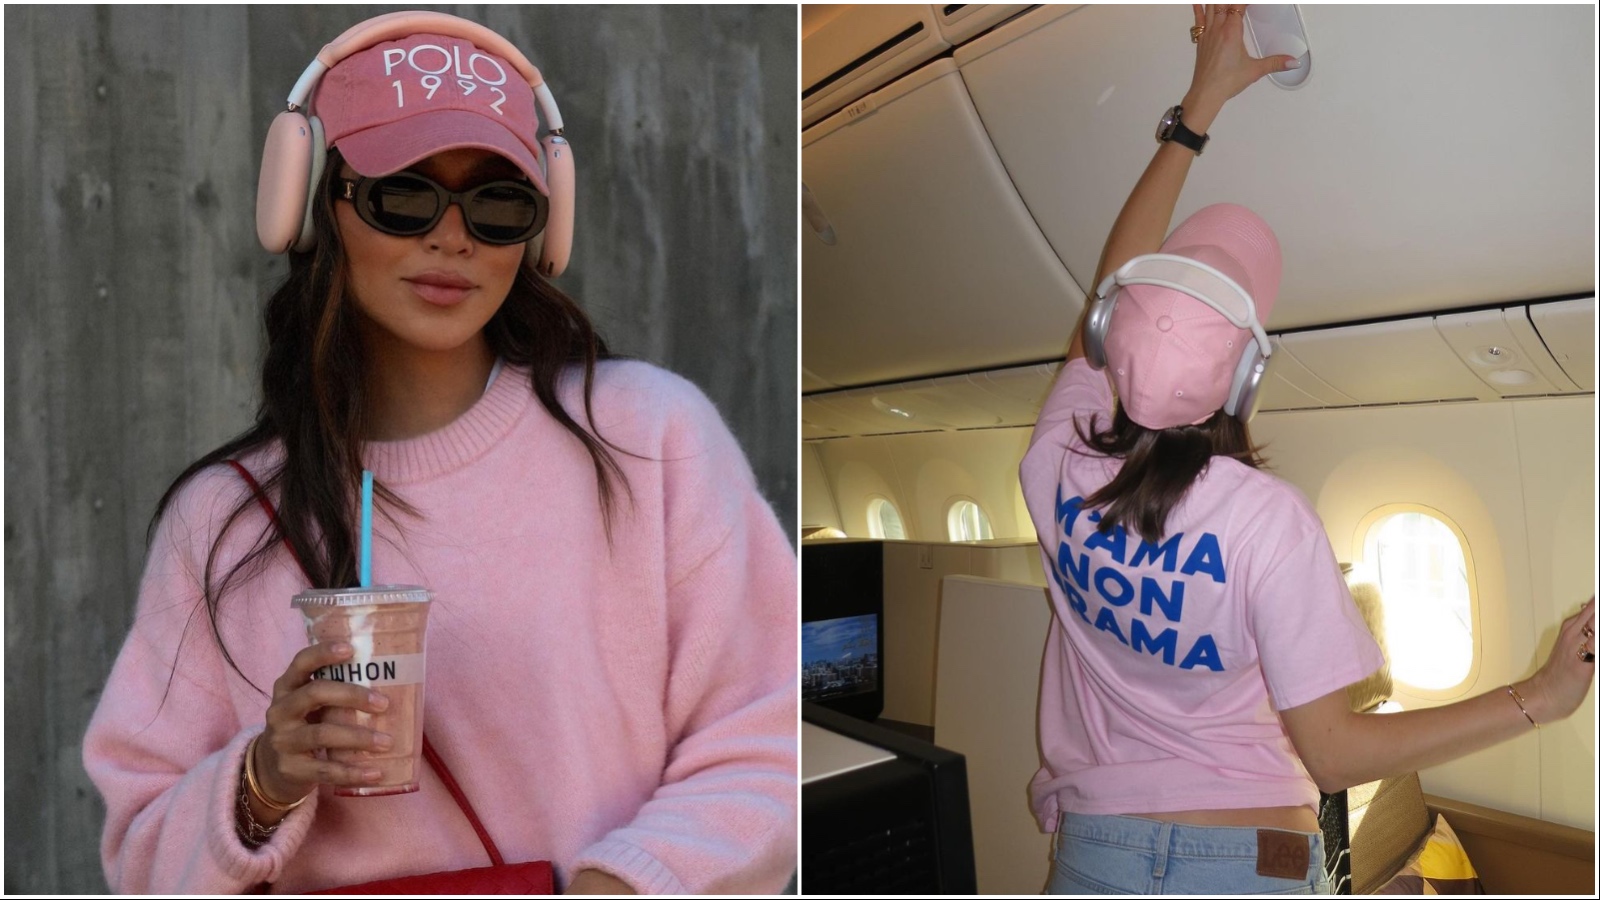 Pink kačket kao ultimativnu beg od kolorističke monotonije – Zara Man ima savršen model